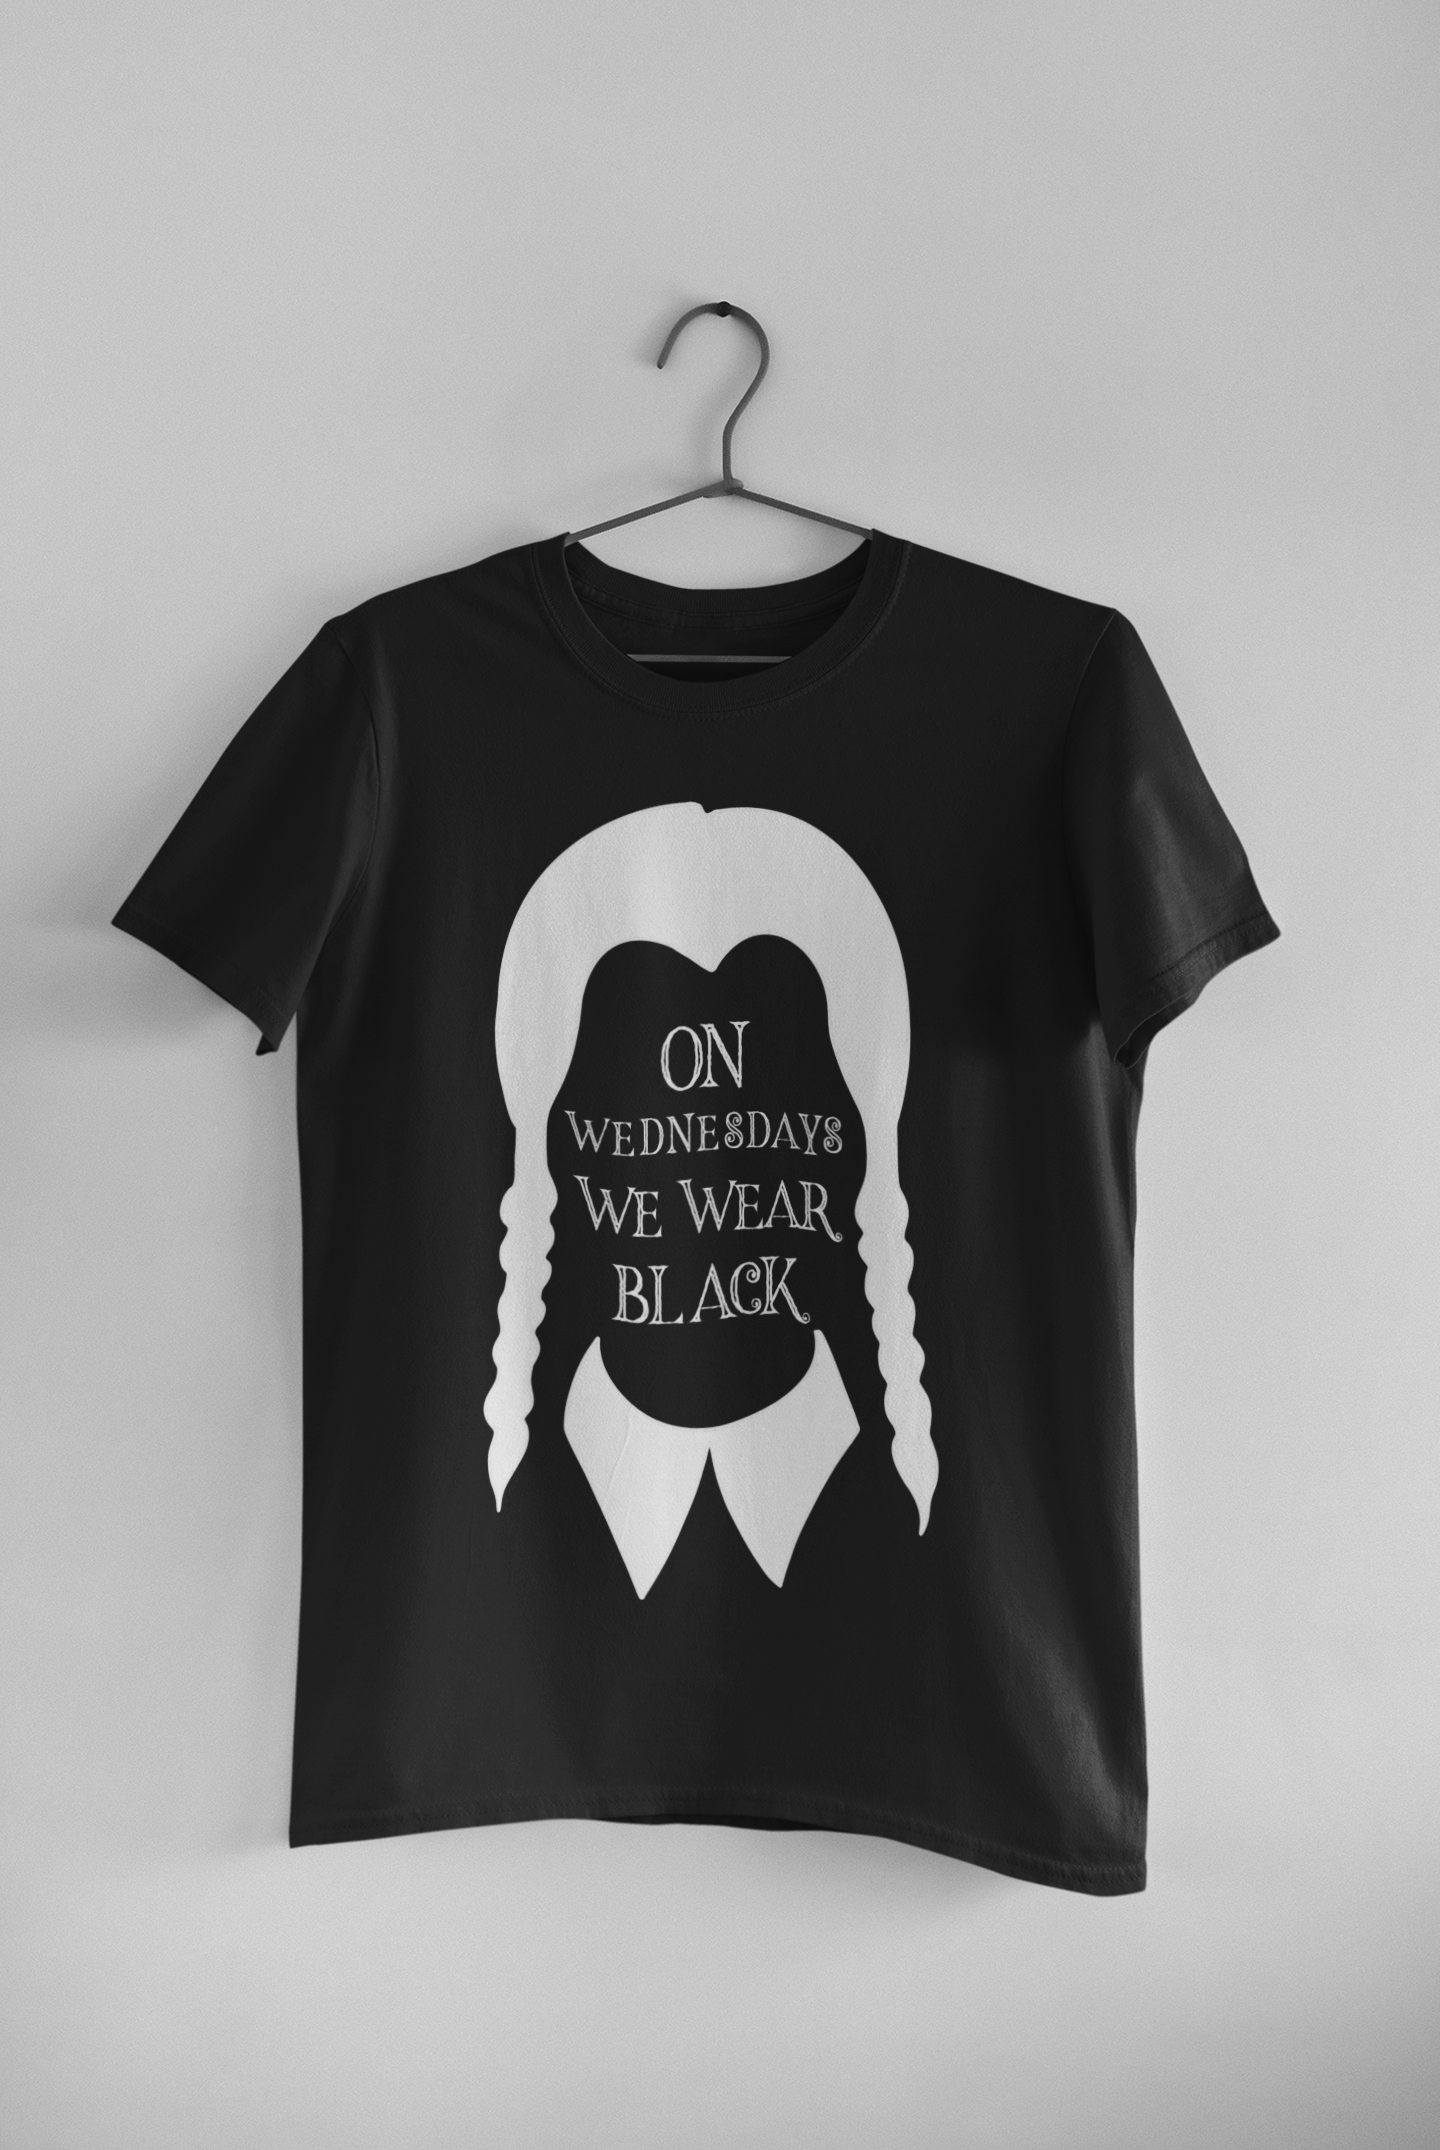 On Wednesdays we wear BLACK custom designed DTG printed t shirt